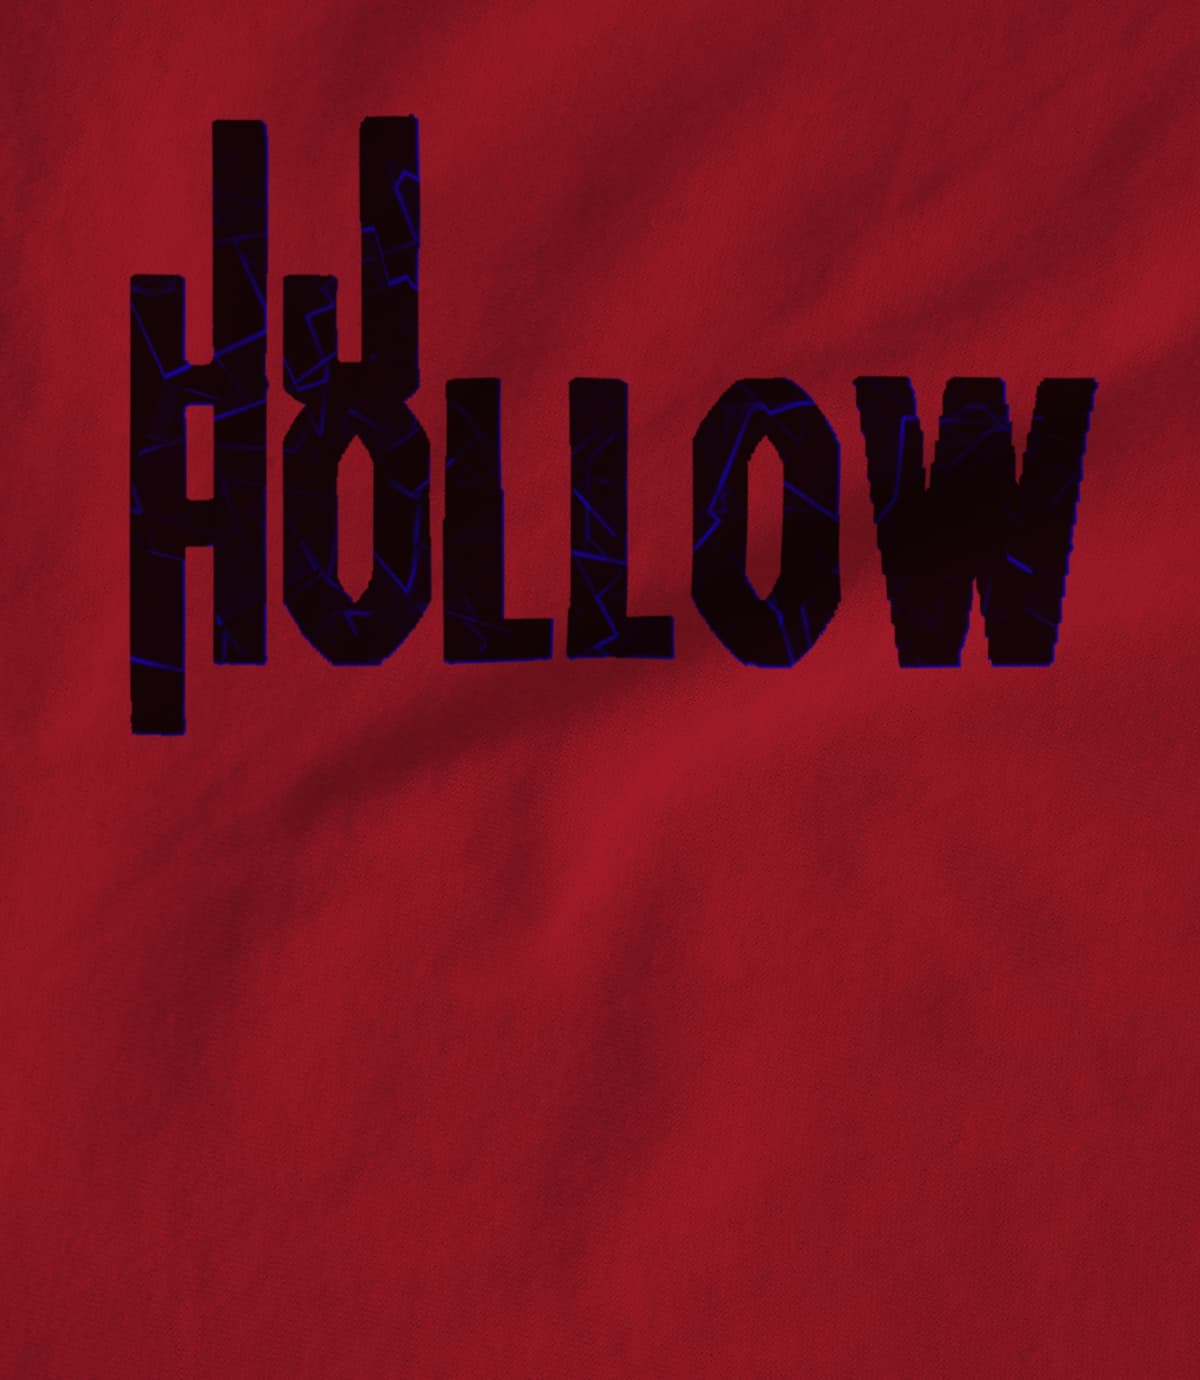 JJ Hollow